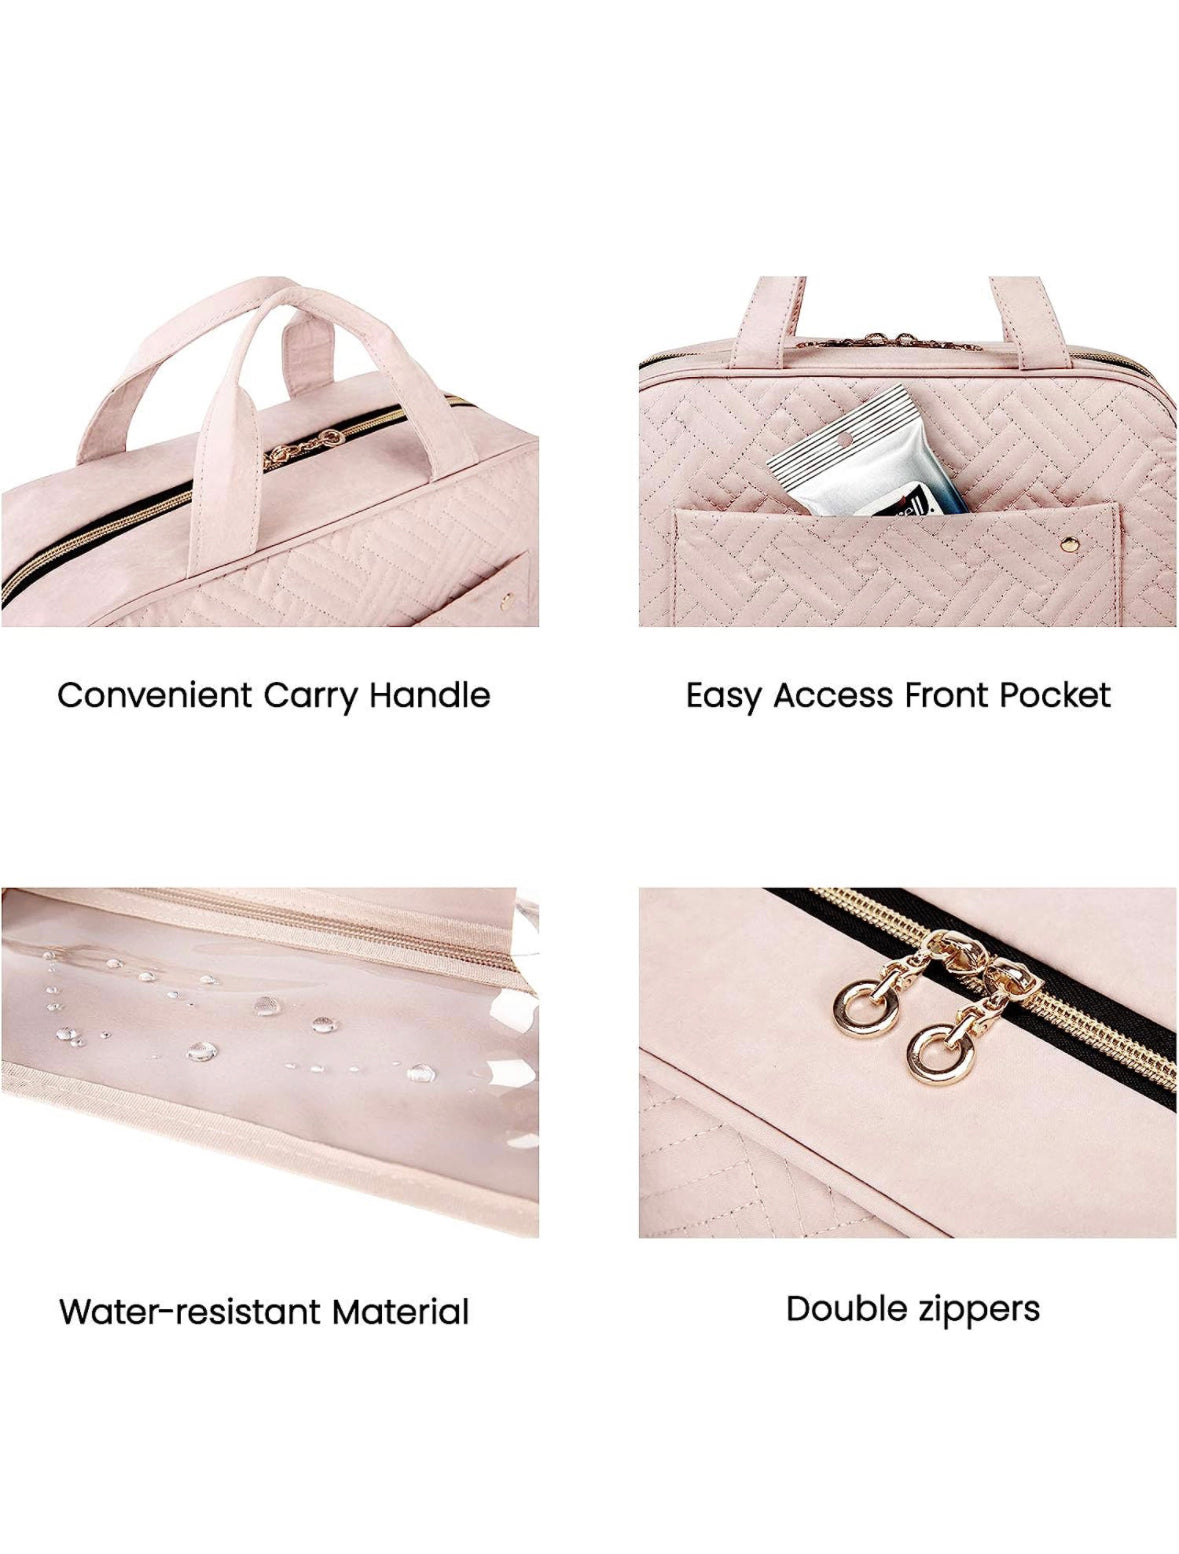 BAGSMART Toiletry Bag Travel Bag with Hanging Hook, Water-resistant Makeup Cosmetic Bag.